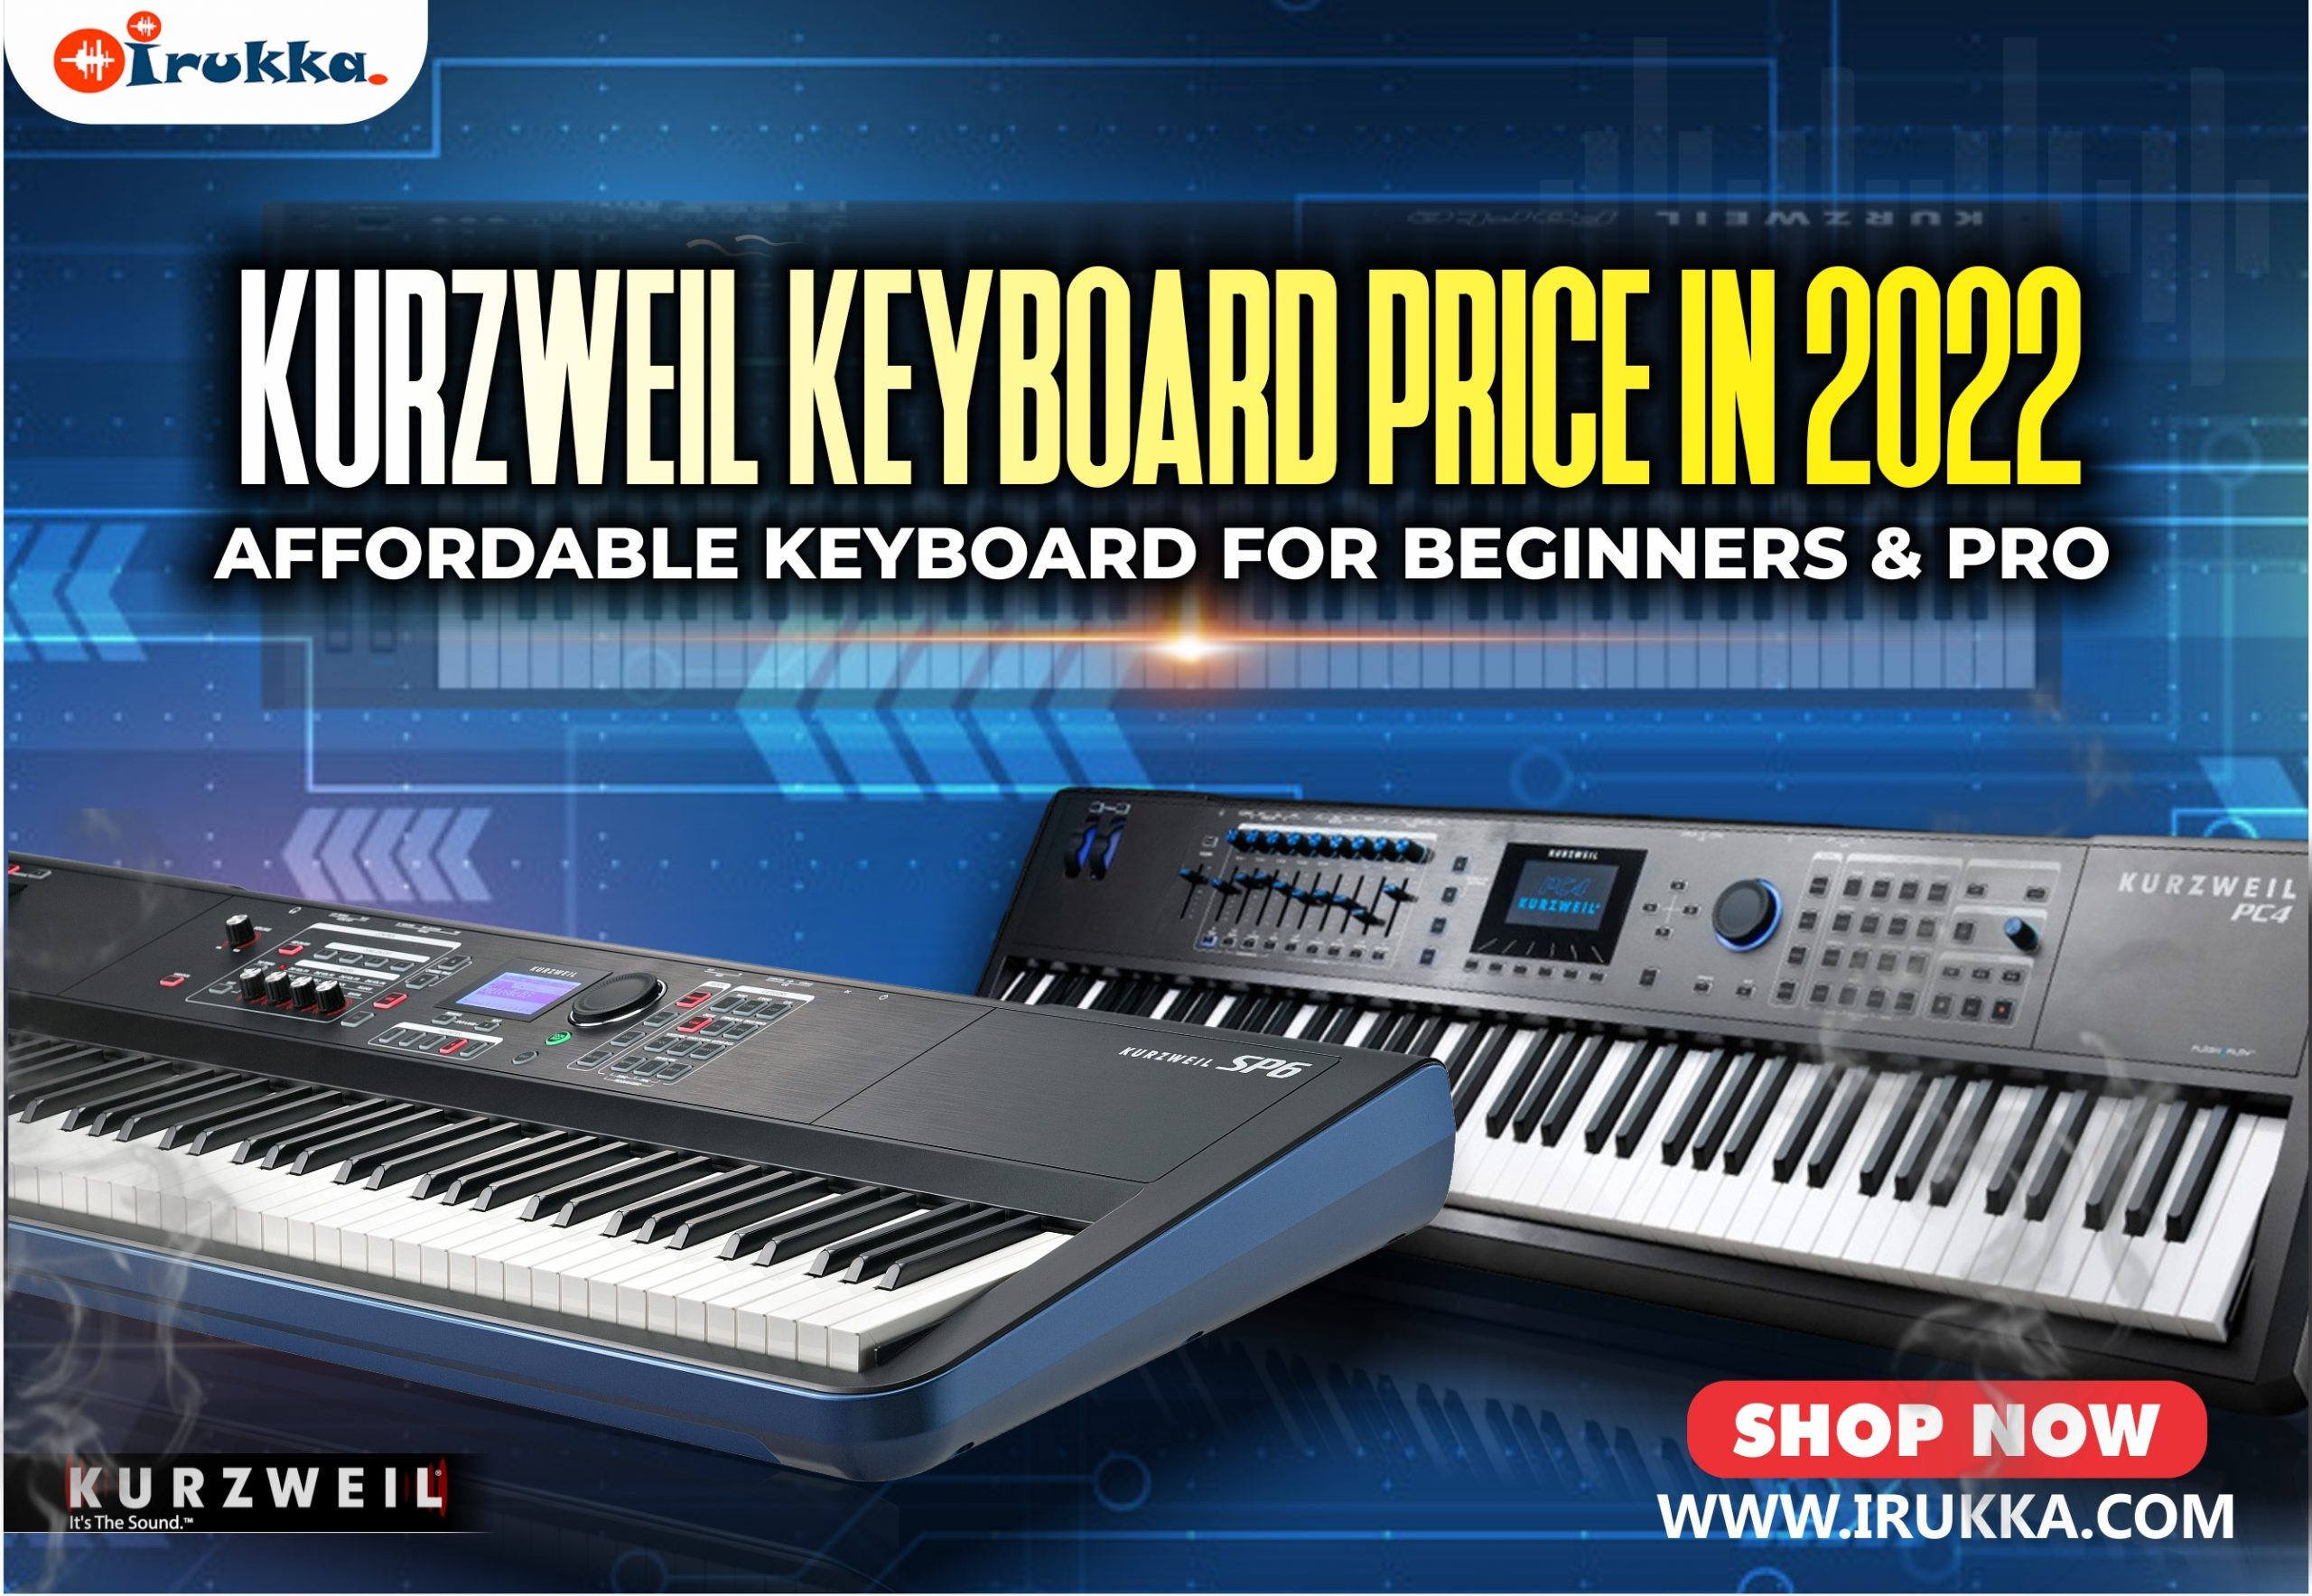 Kurzweil Keyboard Prices for 2022 Nigeria - Buy Online on Irukka.com